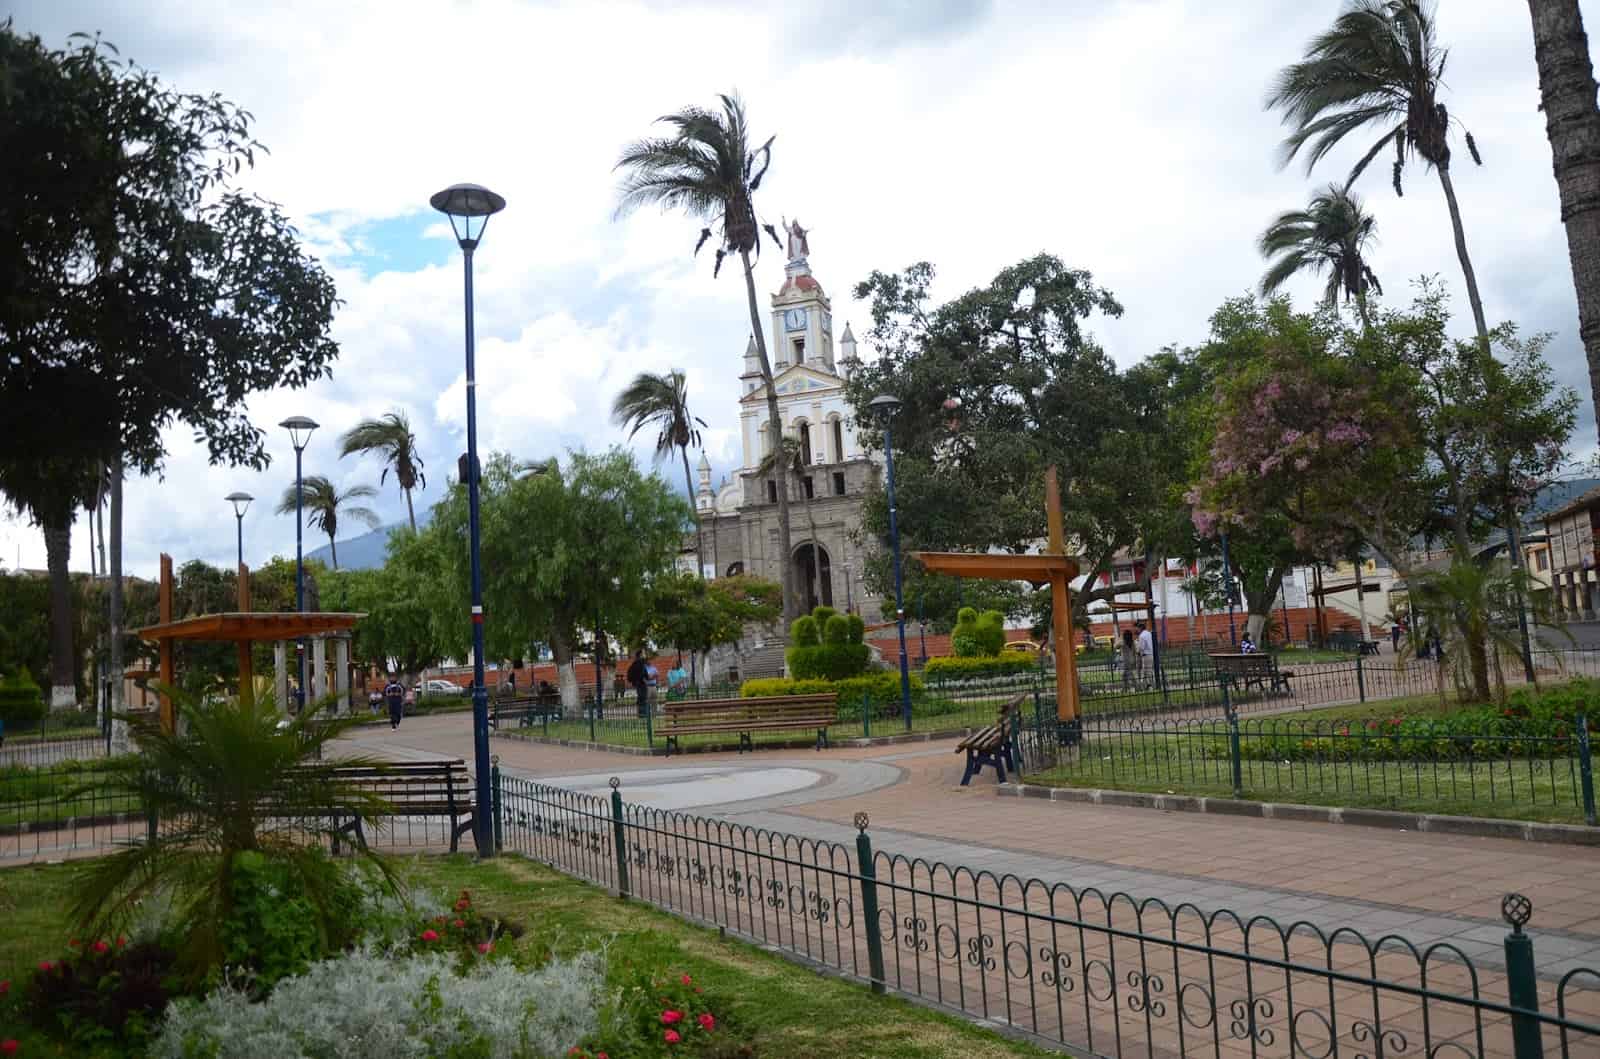 Parque Abdón Calderón in Cotacachi, Ecuador